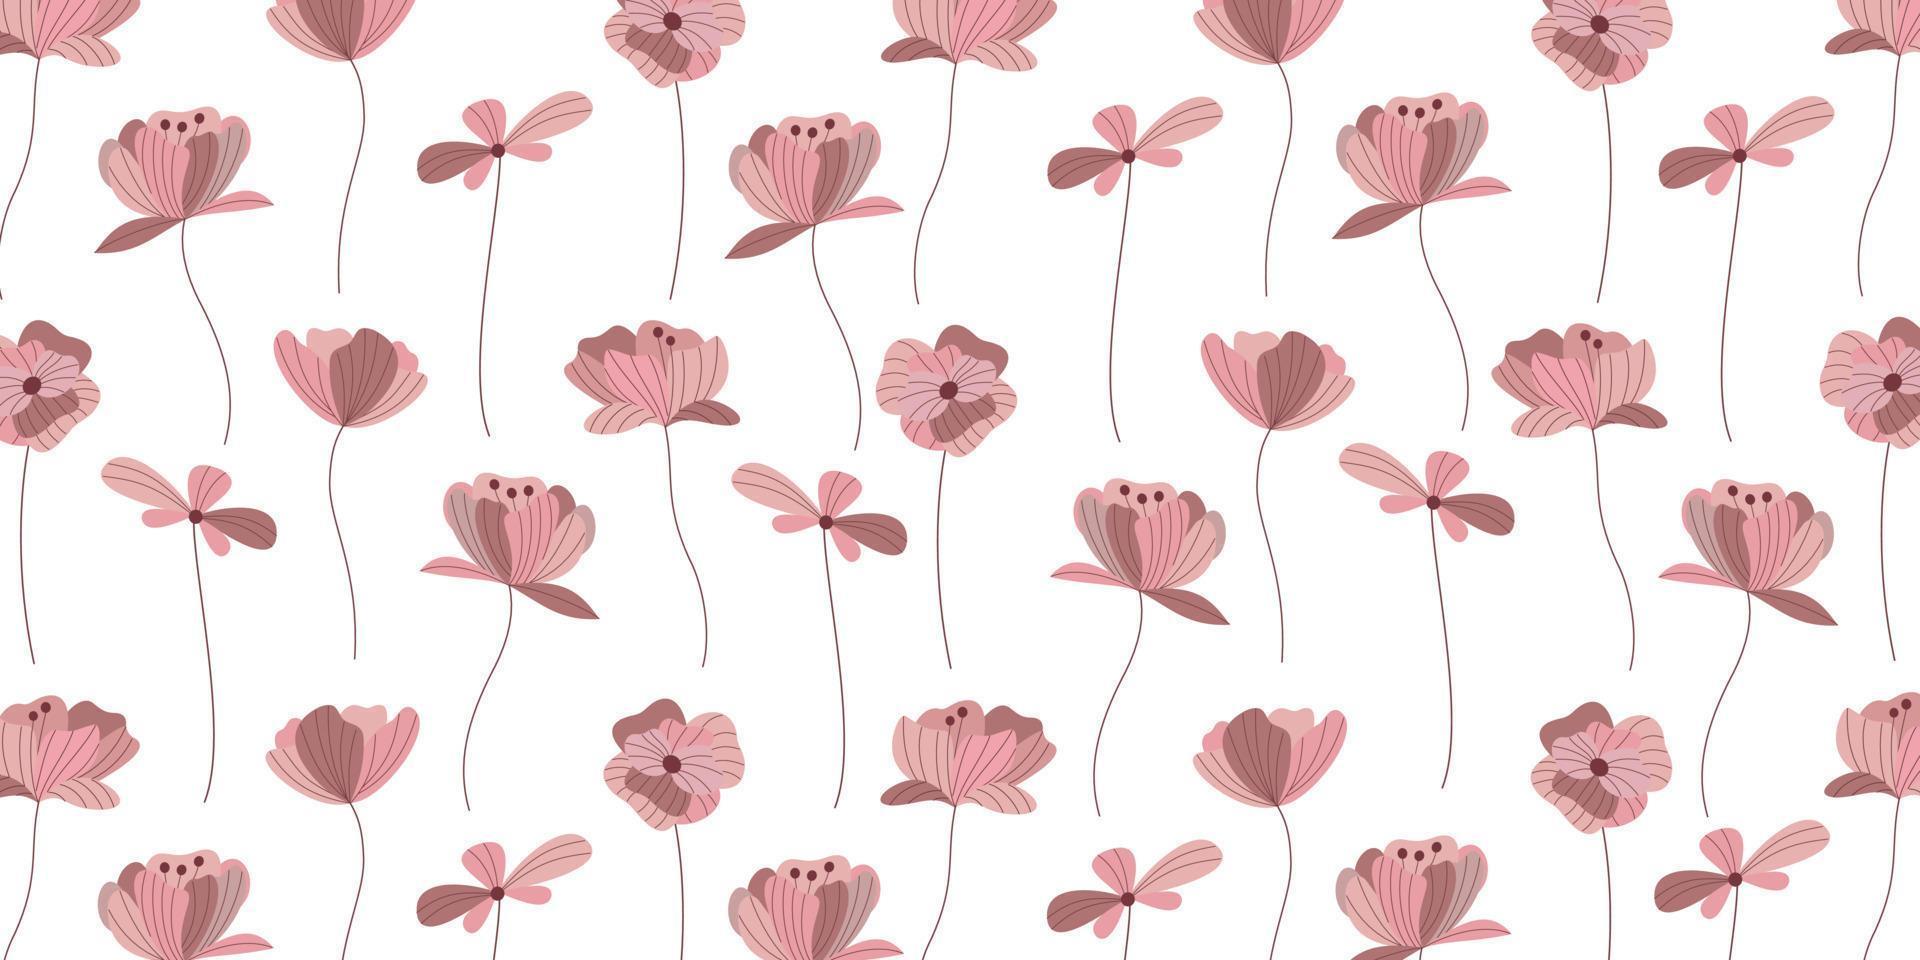 Flower art deco pattern background vector